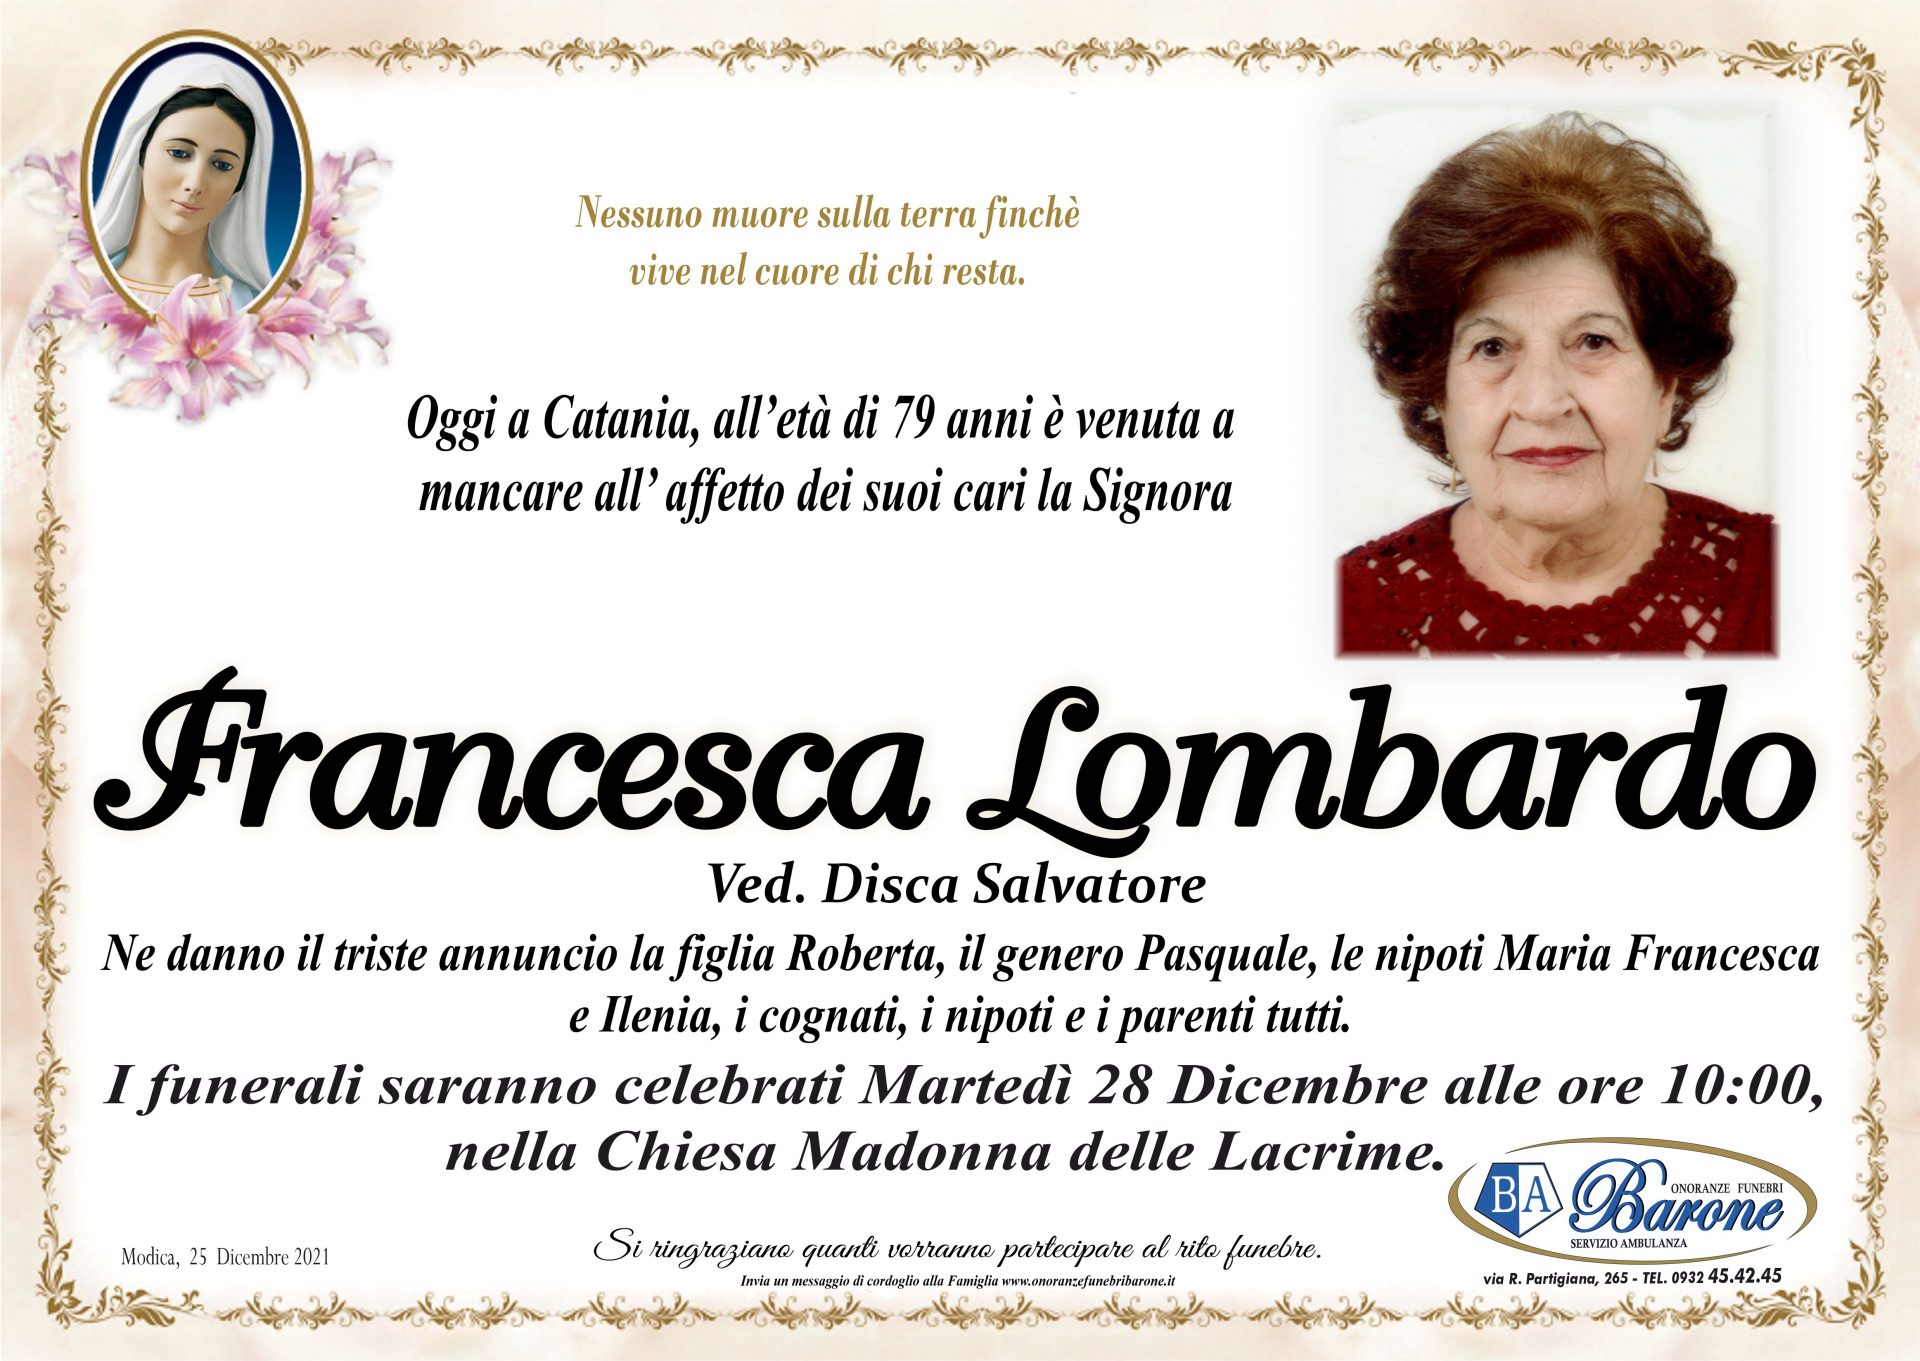 Francesca Lombardo